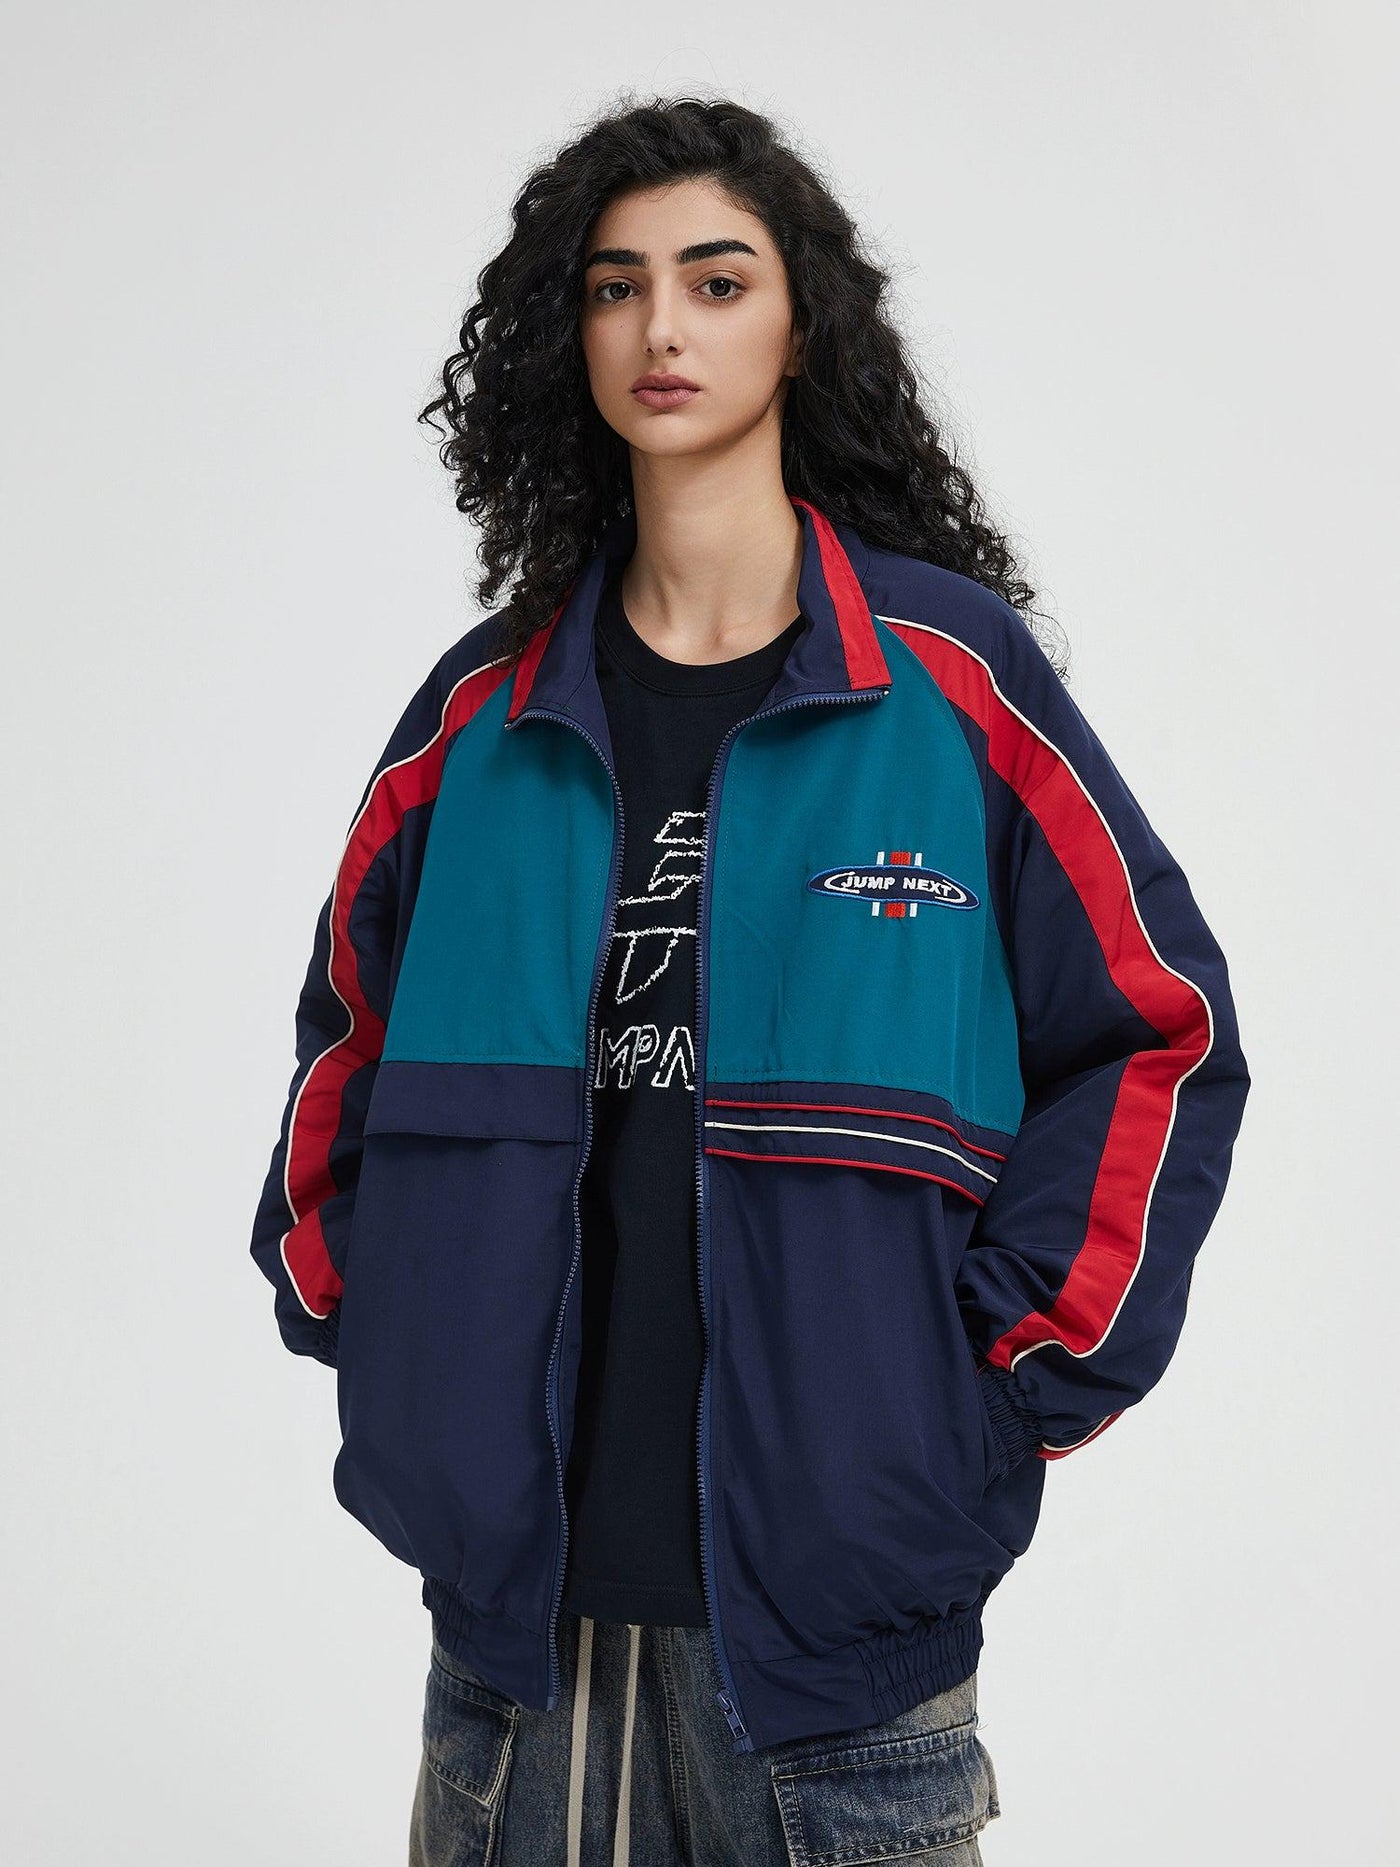 Retro Zipped Casual Jacket Korean Street Fashion Jacket By Jump Next Shop Online at OH Vault